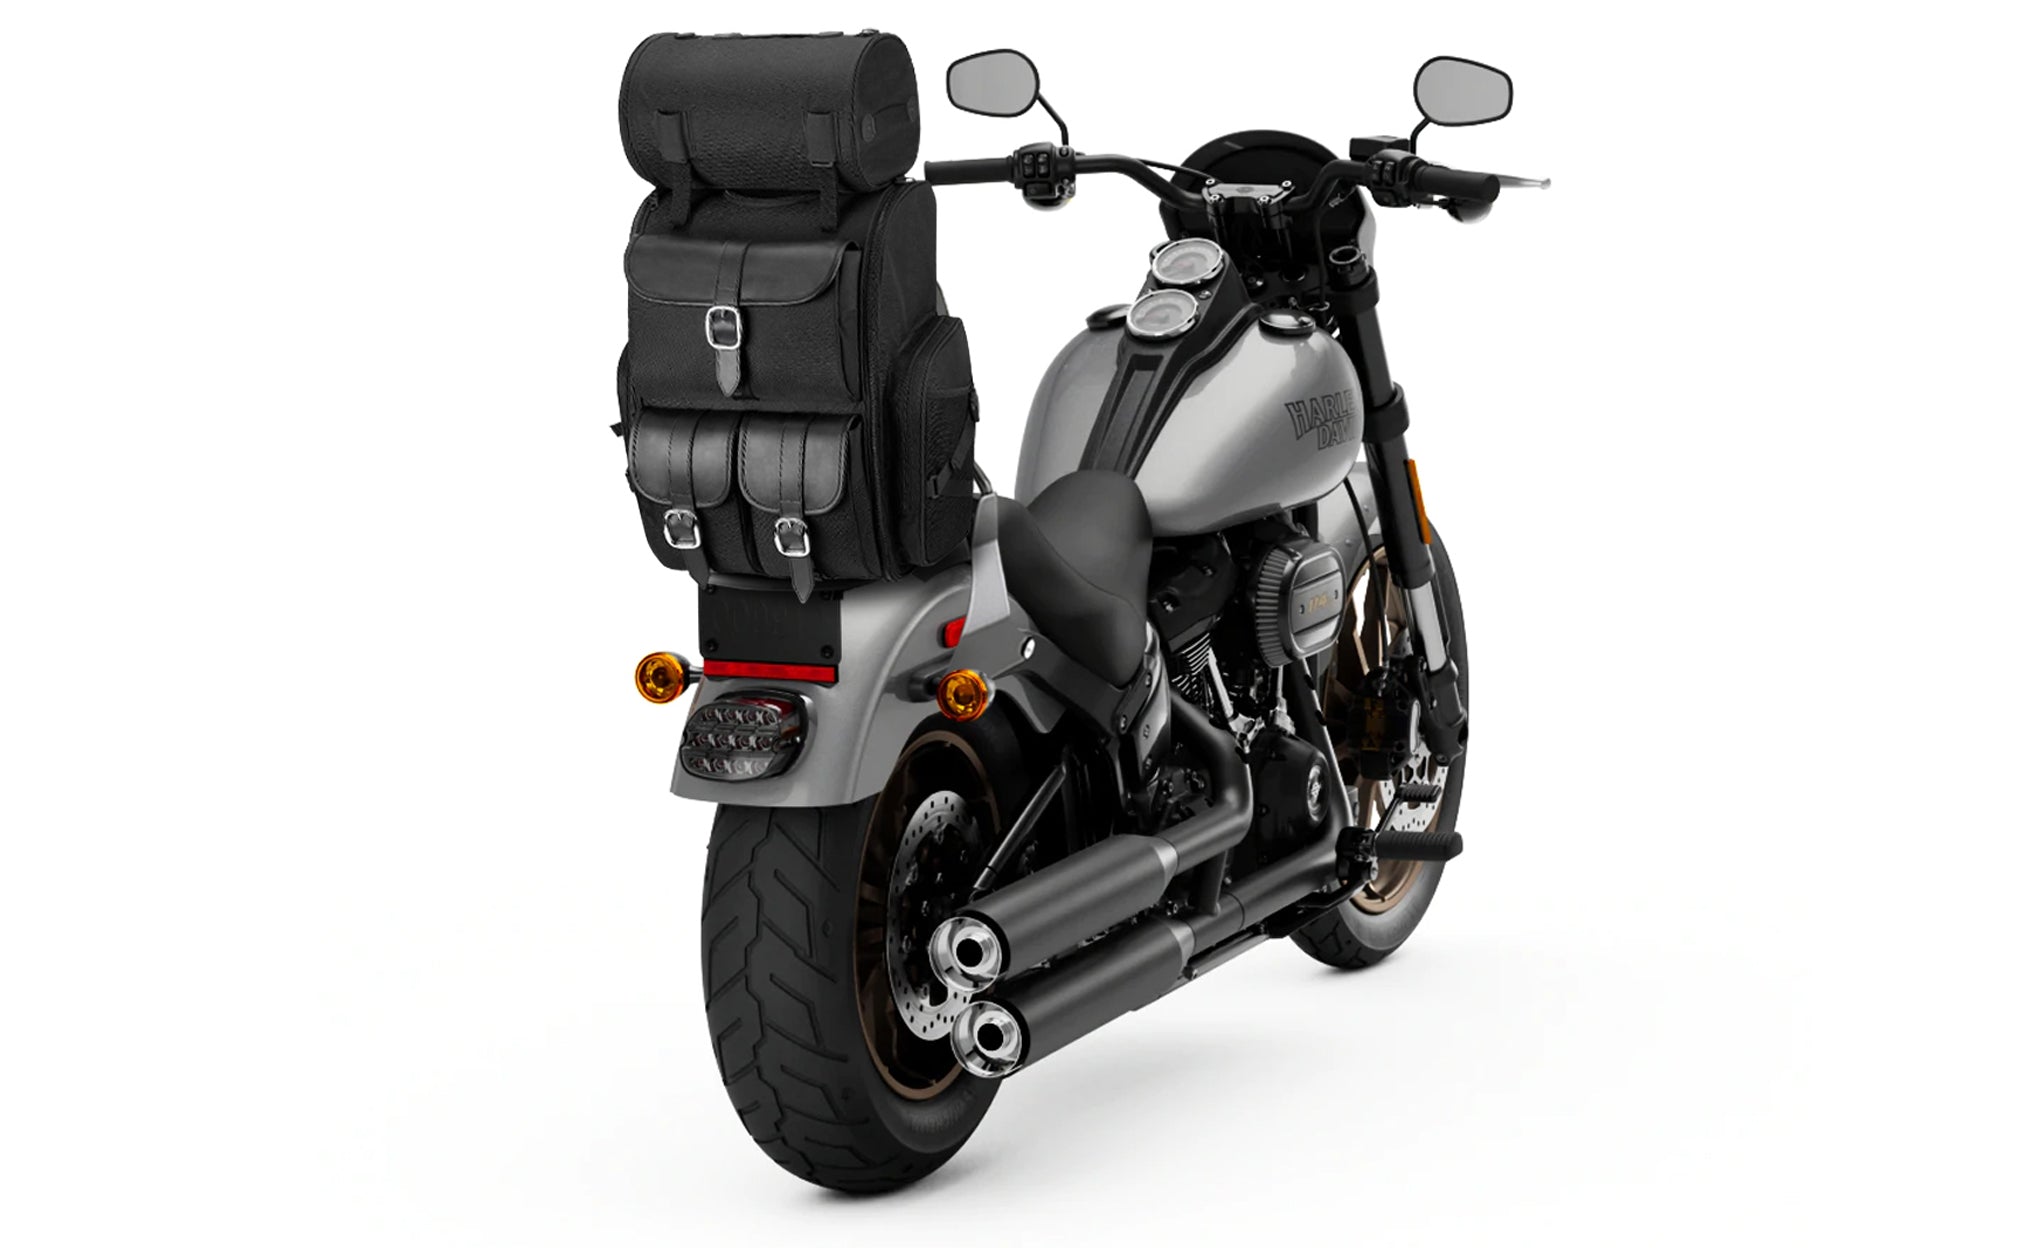 Viking Highway Extra Large Plain Motorcycle Tail Bag for Harley Davidson Bag on Bike View @expand